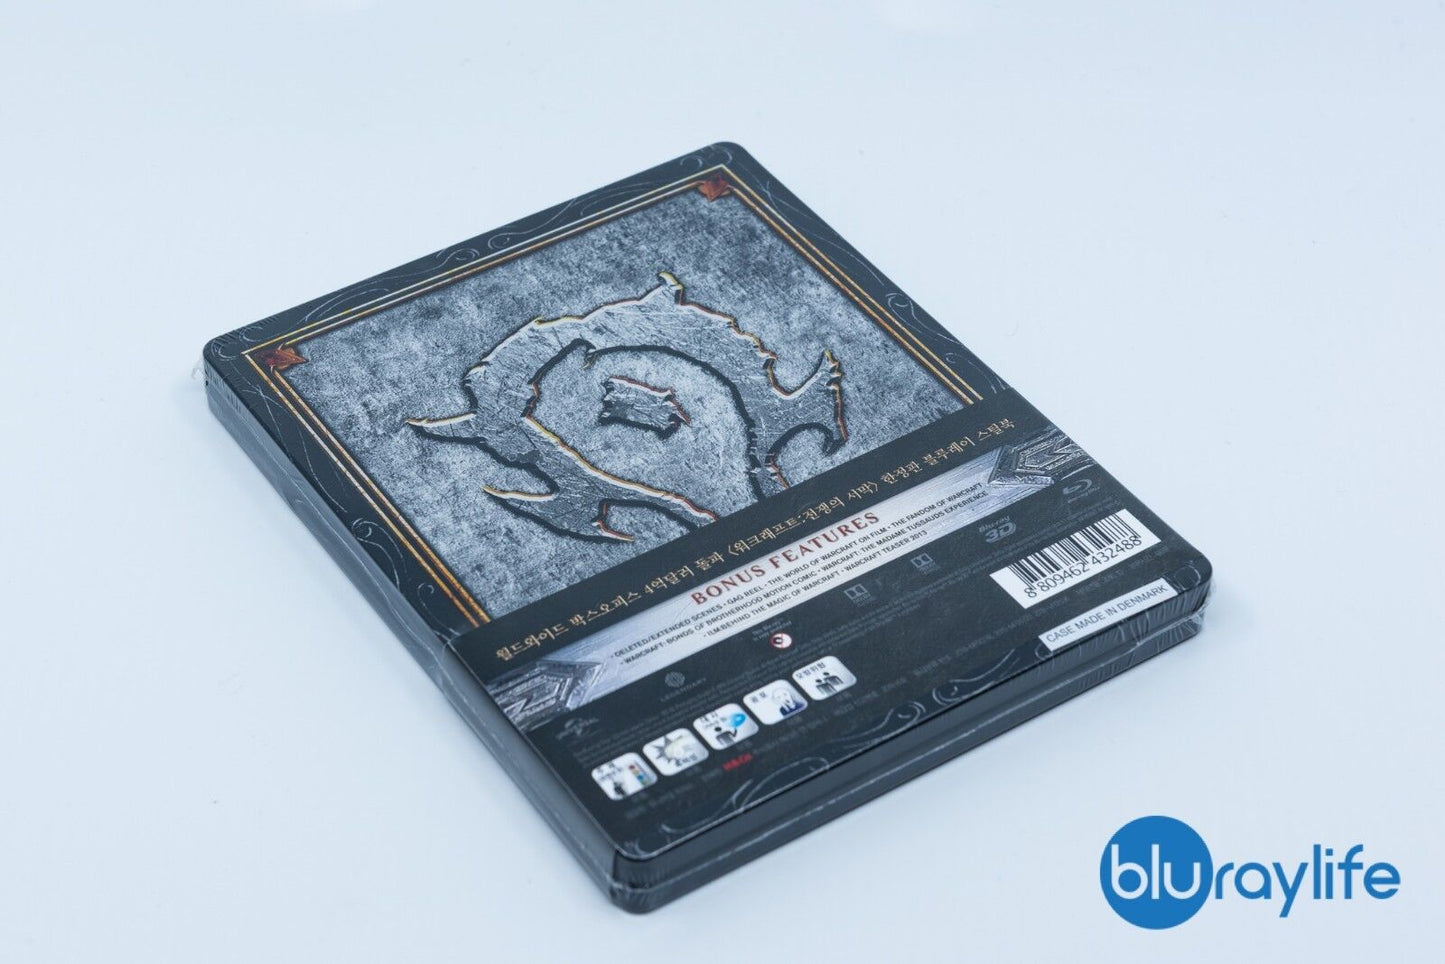 Warcraft: The Beginning (Alliance Version) 3D+2D Blu-ray Steelbook